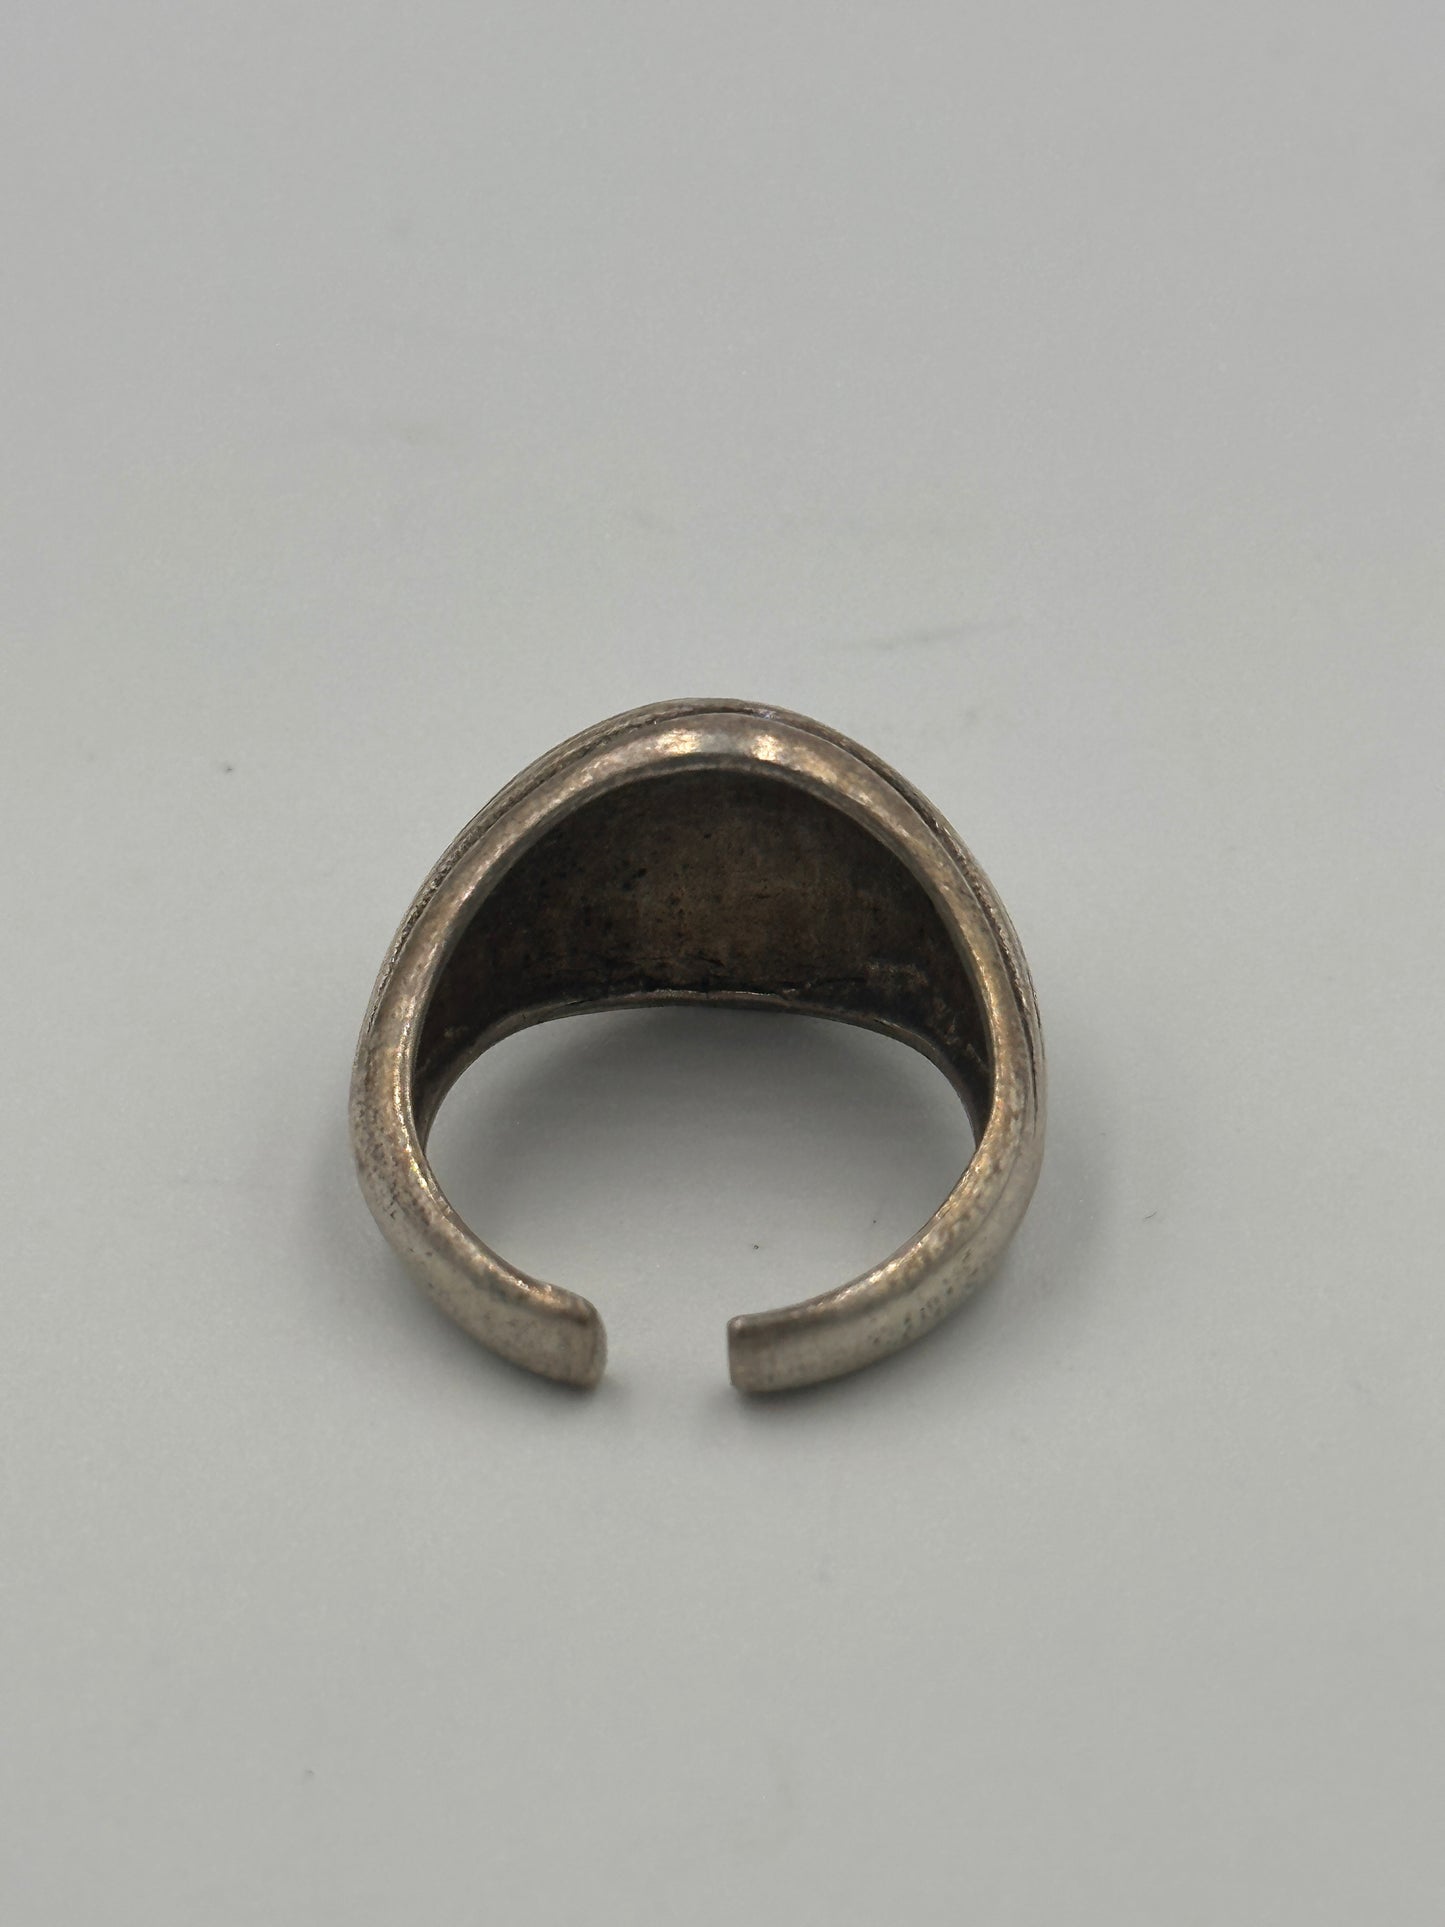 Vintage Silber (800) Ring in Wellenform